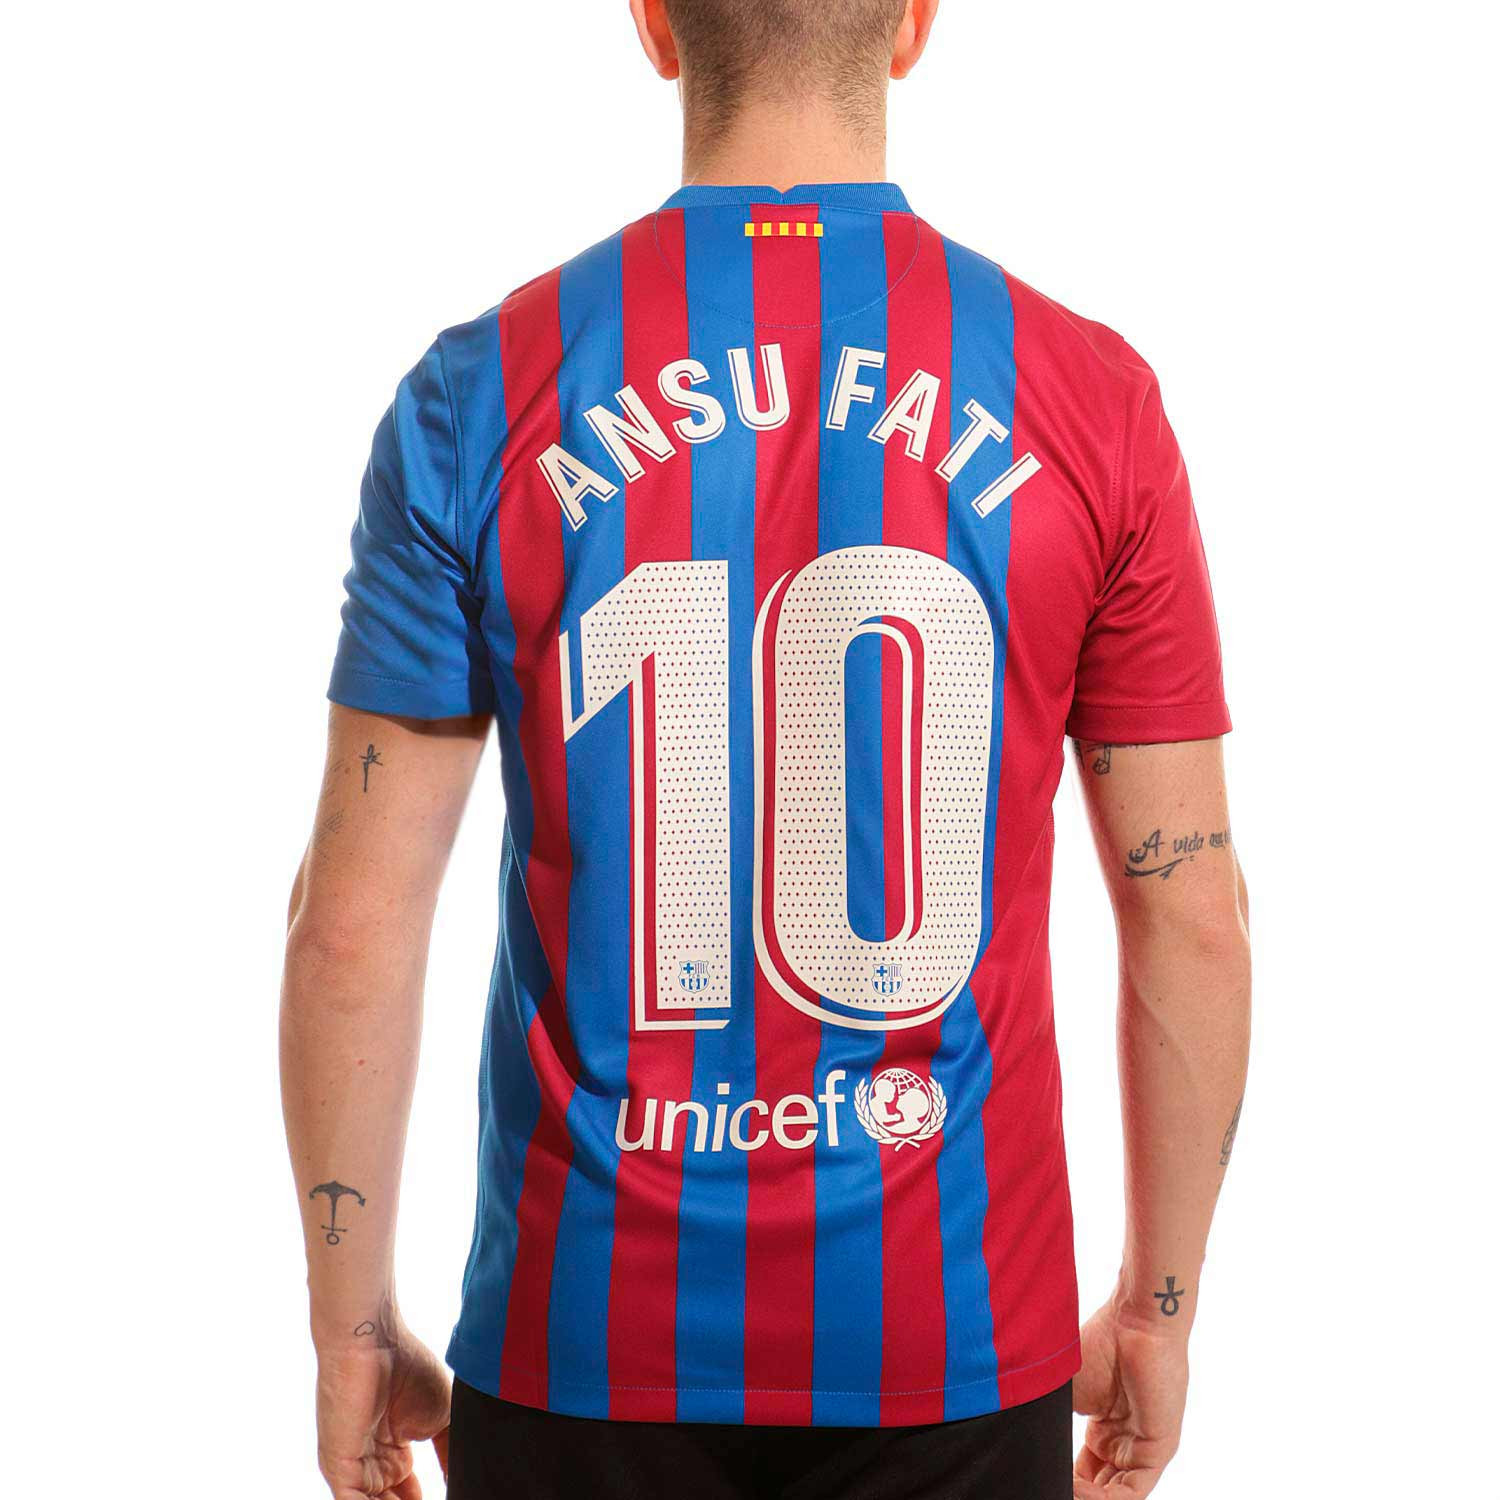 Víctor Lugar de la noche As Camiseta Nike Barcelona 2021 2022 Ansu Fati Stadium | futbolmania